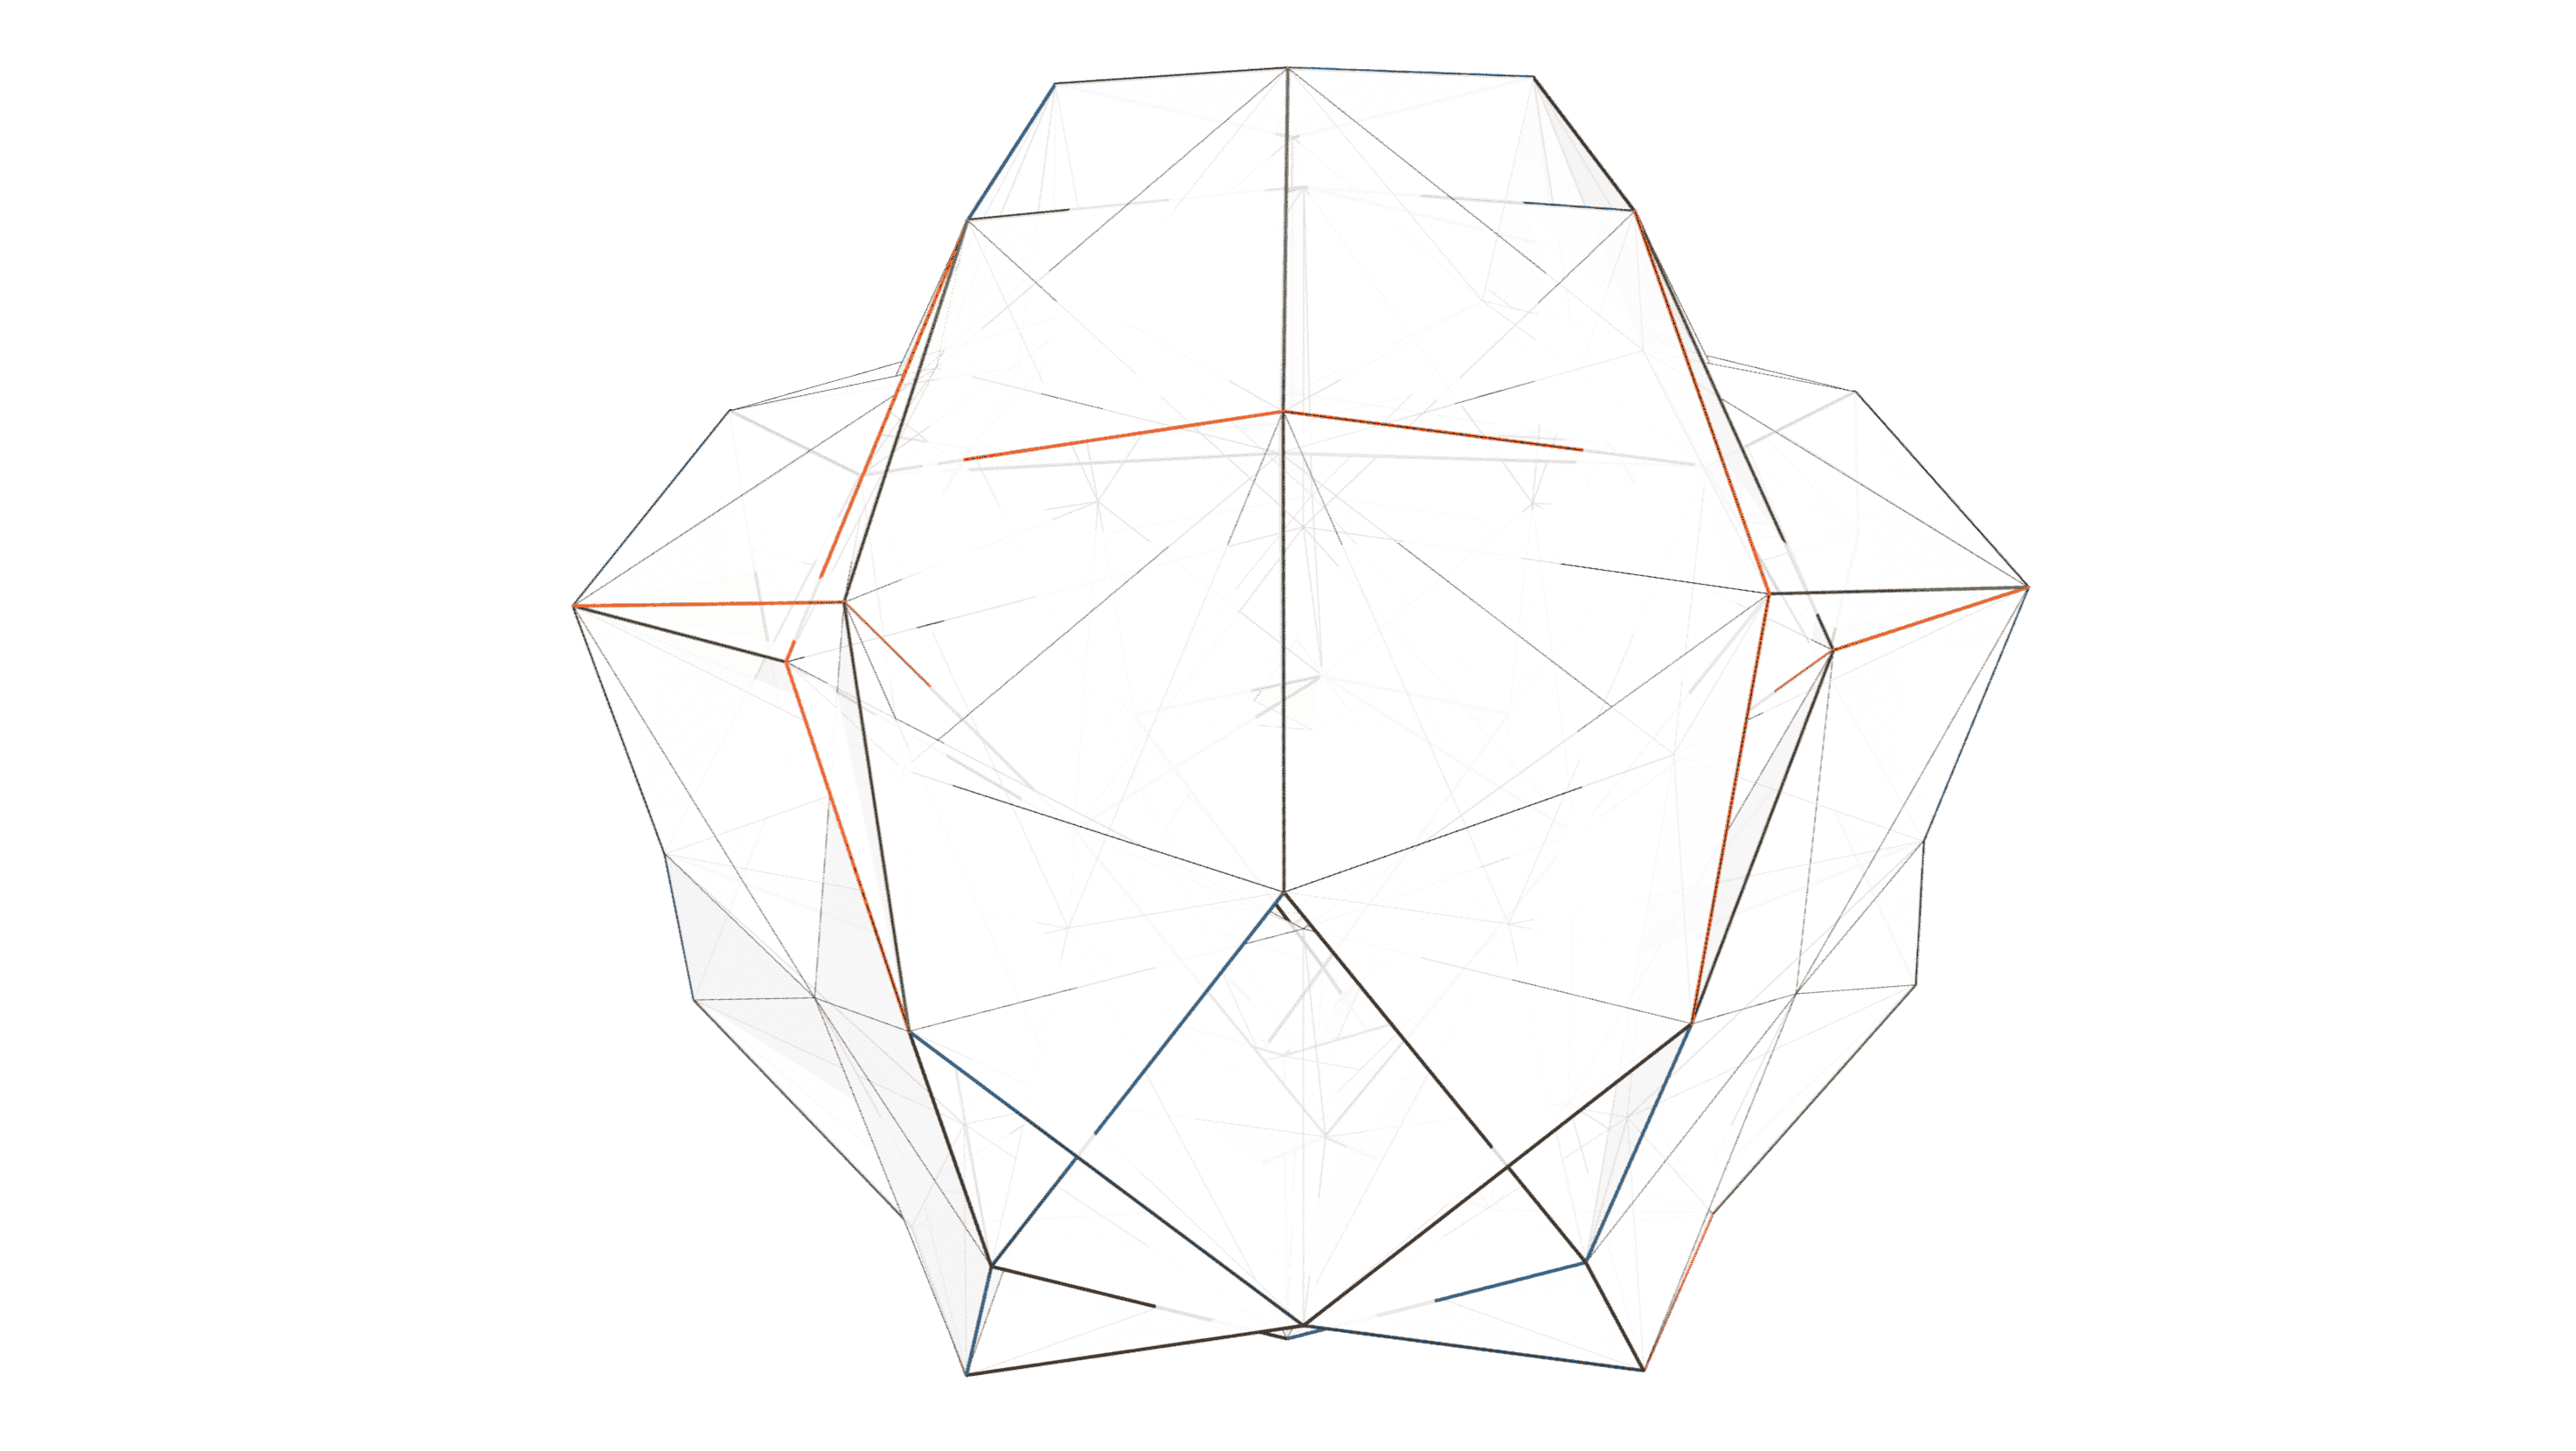 Thumbnail of Octagonal 1024-fold Symmetry Expansion